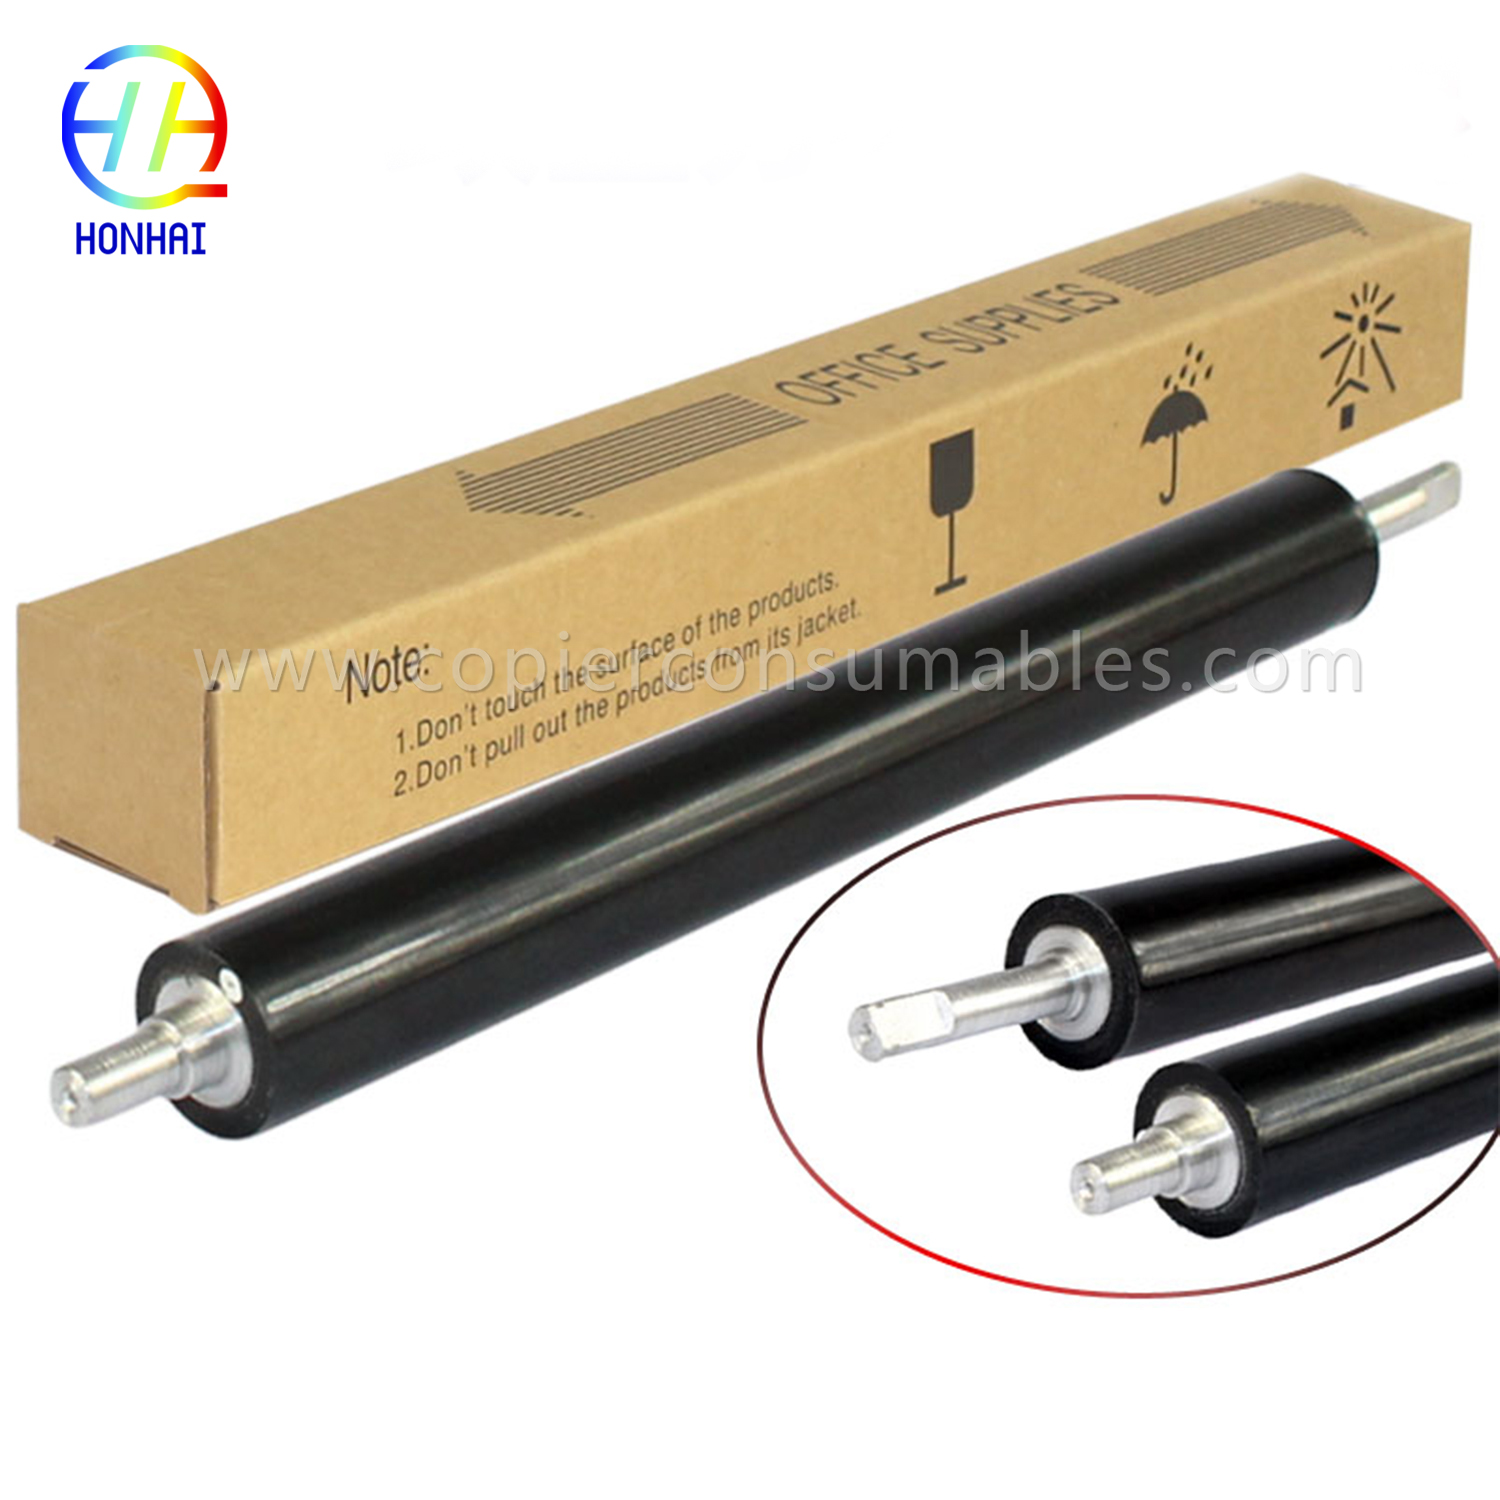 Lower Pressure Roller for HP LaserJet 2410 2420 2430 (RC1-3969-000)